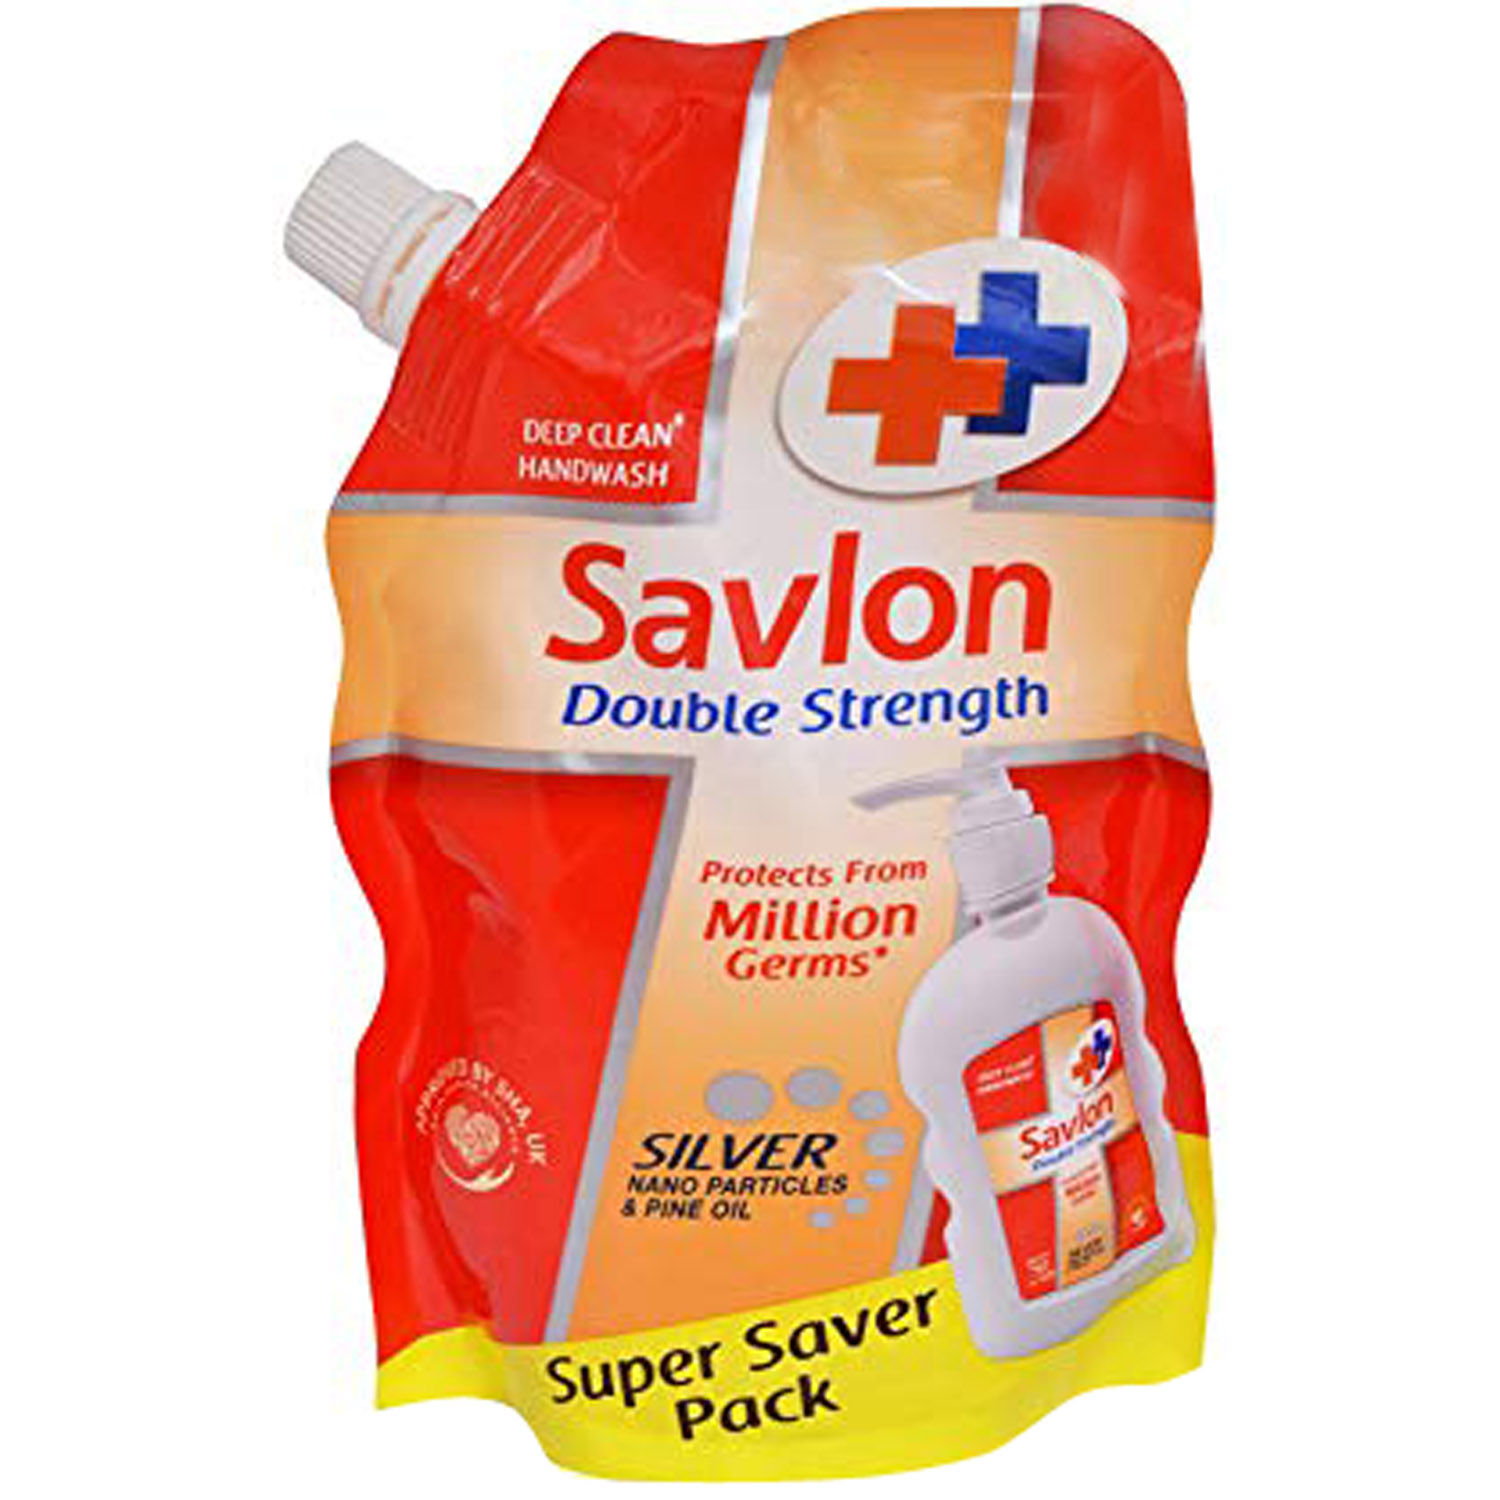 Buy Savlon Double Strength Handwash, 185 ml Refill Pack Online